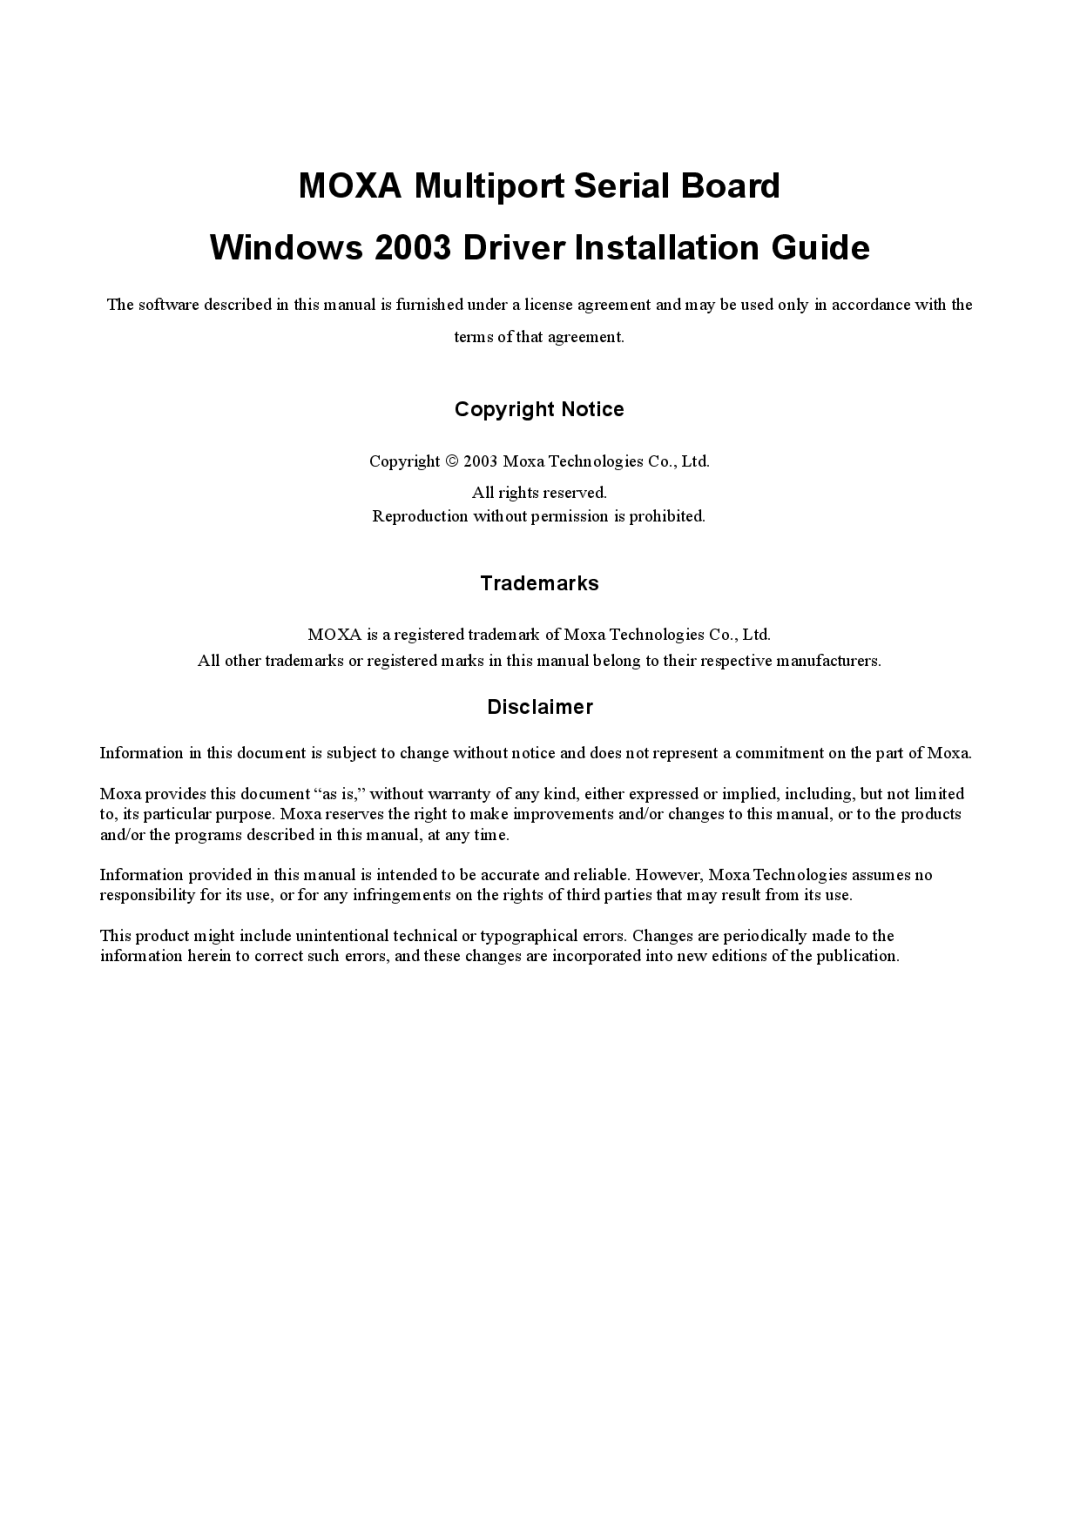 Moxa Technologies Windows 2003 Driver manual Copyright Notice 